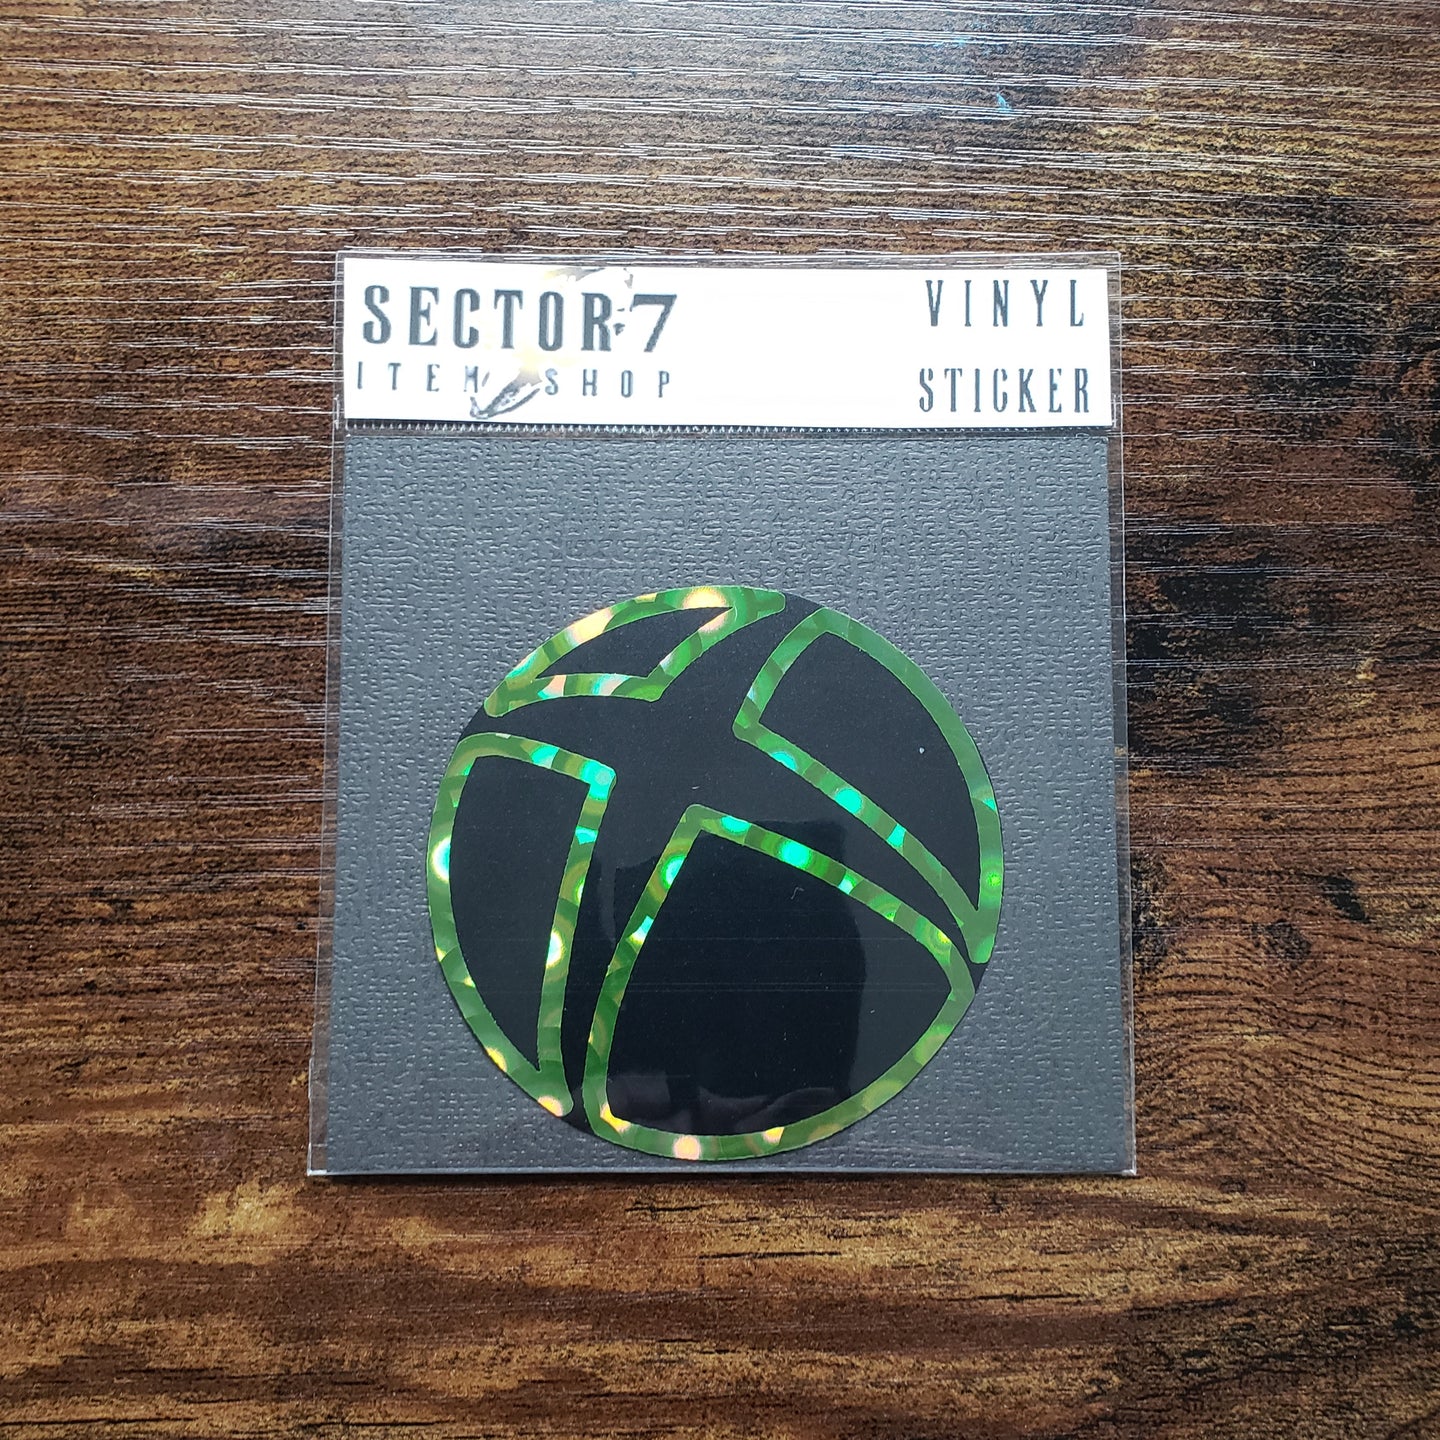 XBox Vinyl Sticker - Sector 7 Item Shop